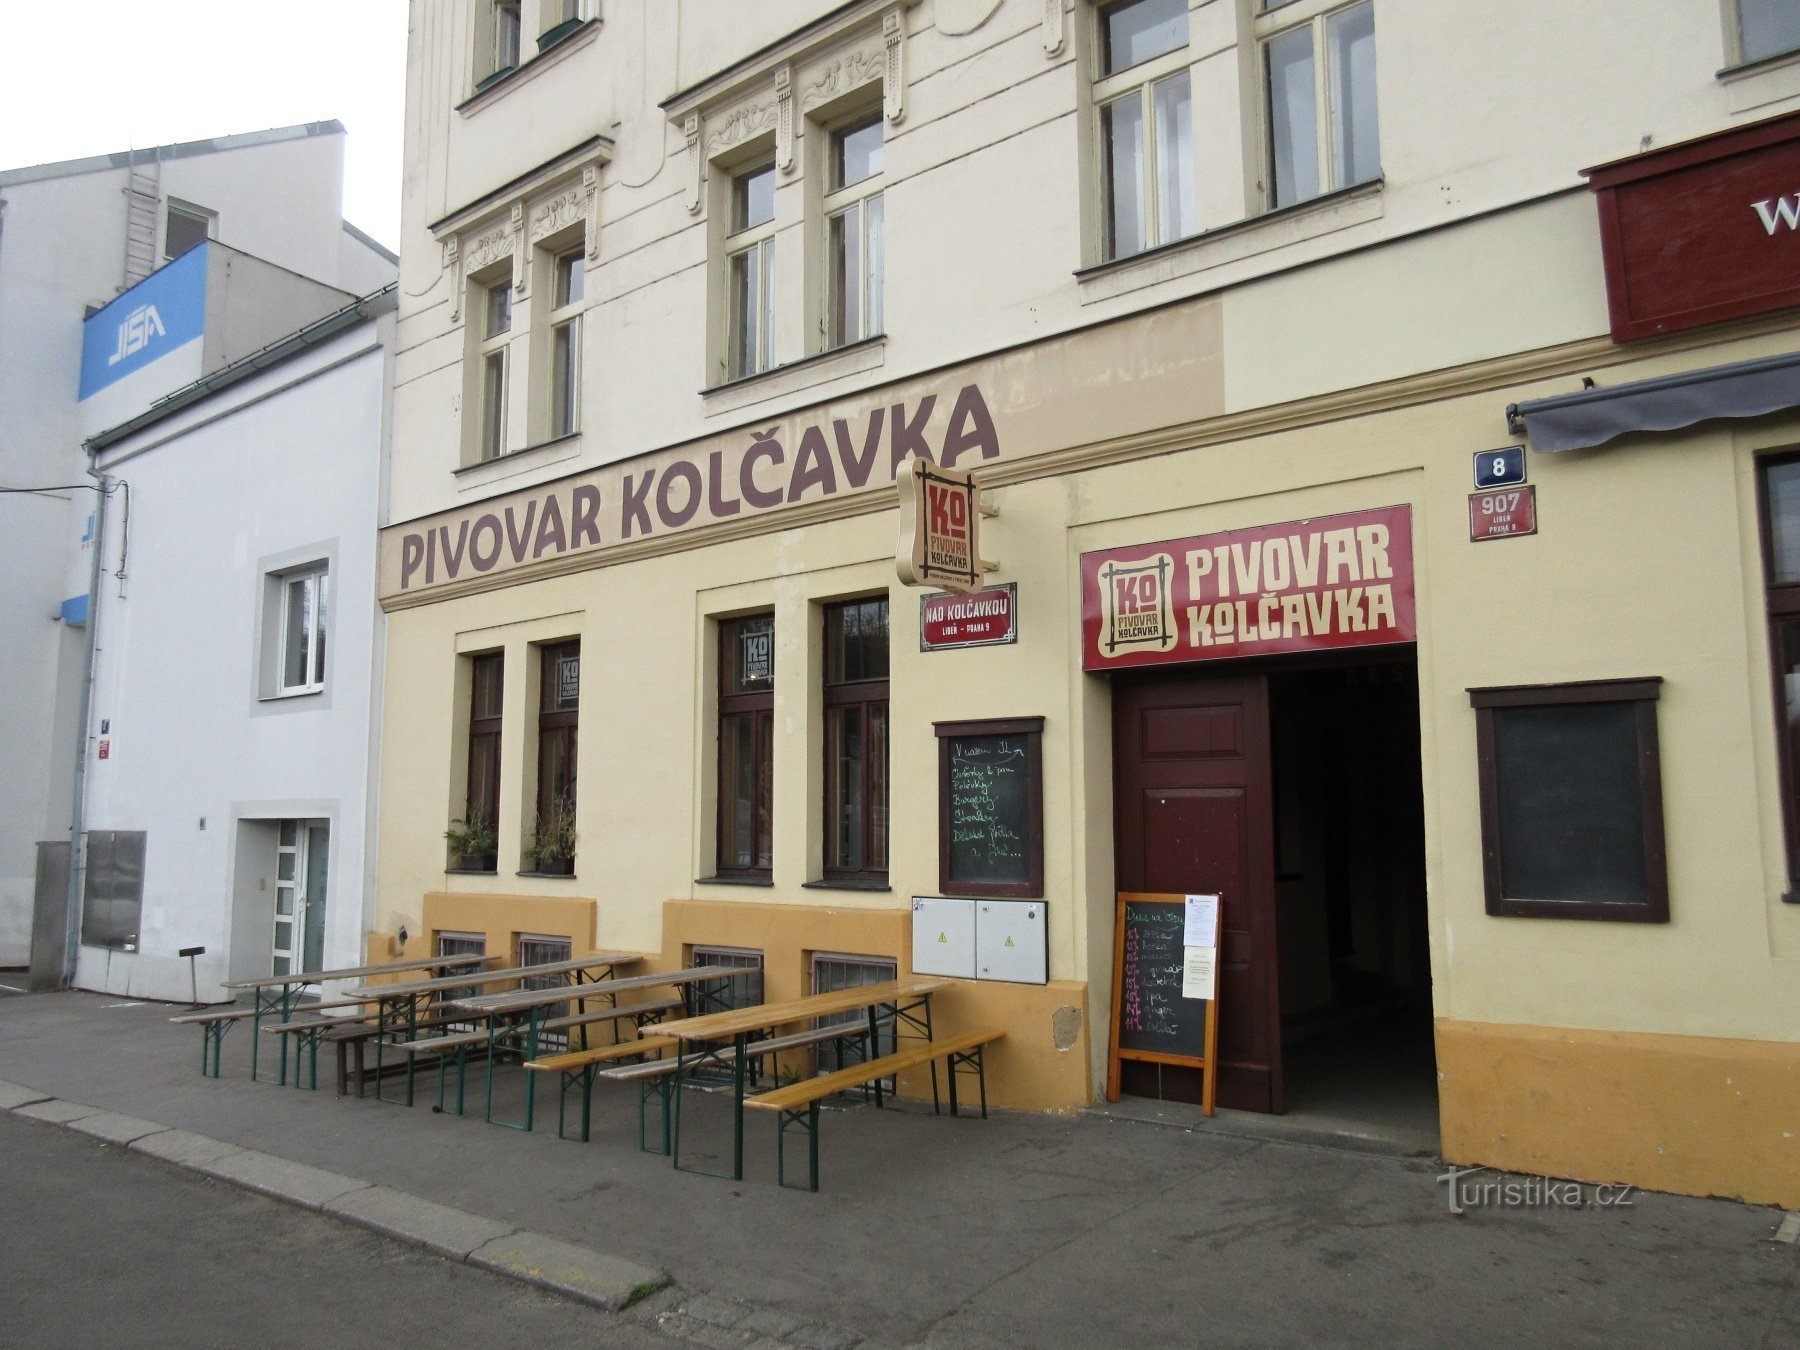 Kolčavka-bryggeriet på gatan Nad Kolčavkou